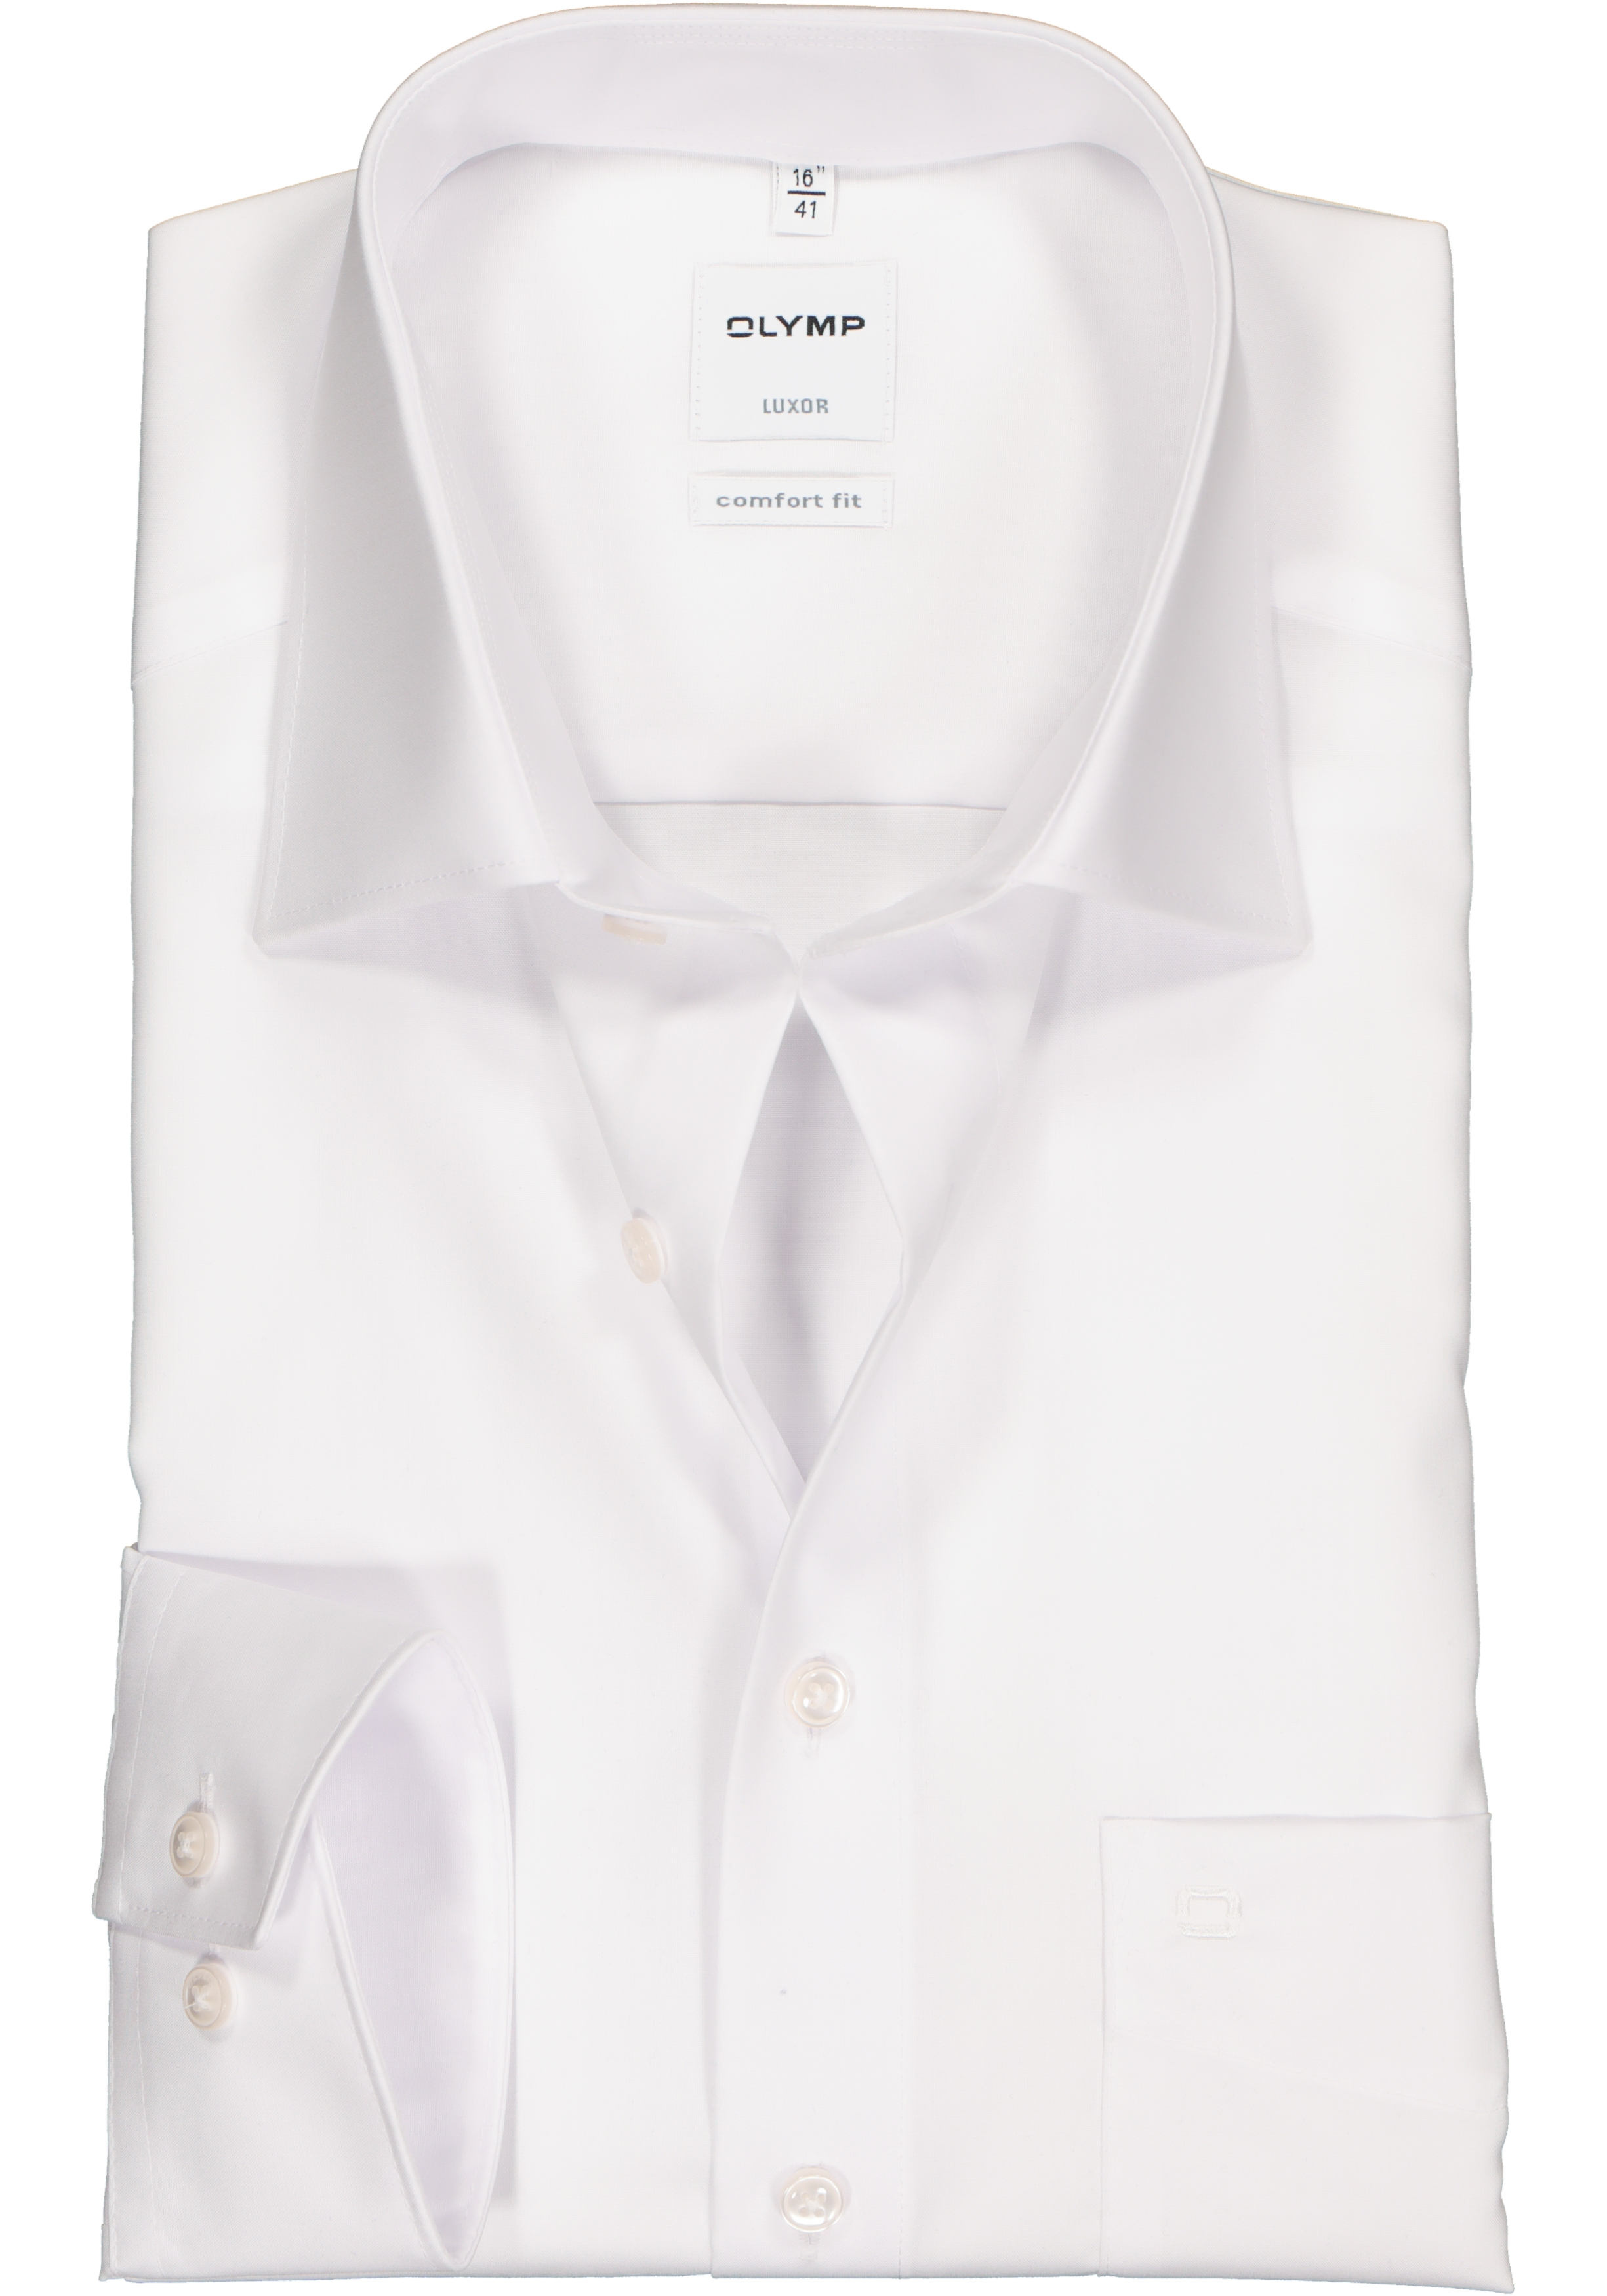 OLYMP Luxor comfort fit overhemd, mouwlengte 7, wit